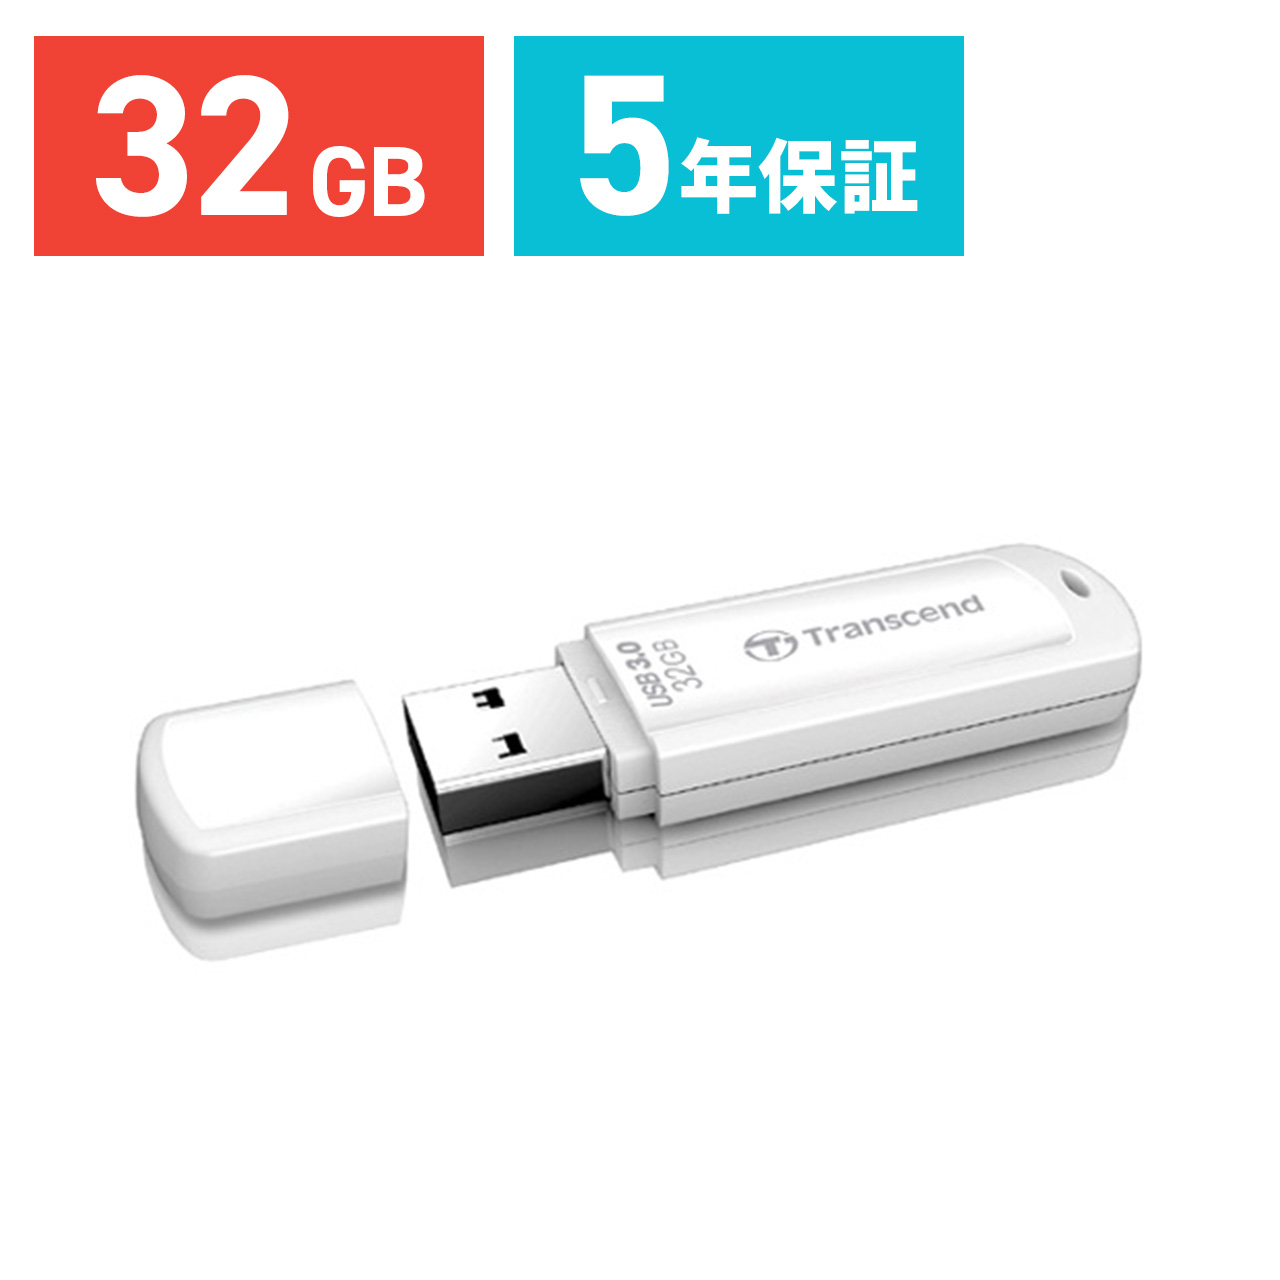 TS32GJF730 ネコポス専用 送料無料対象品 Transcend USBメモリ 32GB USB3.0 JetFlash730 卒業 おしゃれ 品質保証 大容量 入学 贈答 USBメモリー 光沢ホワイトボディ 高速